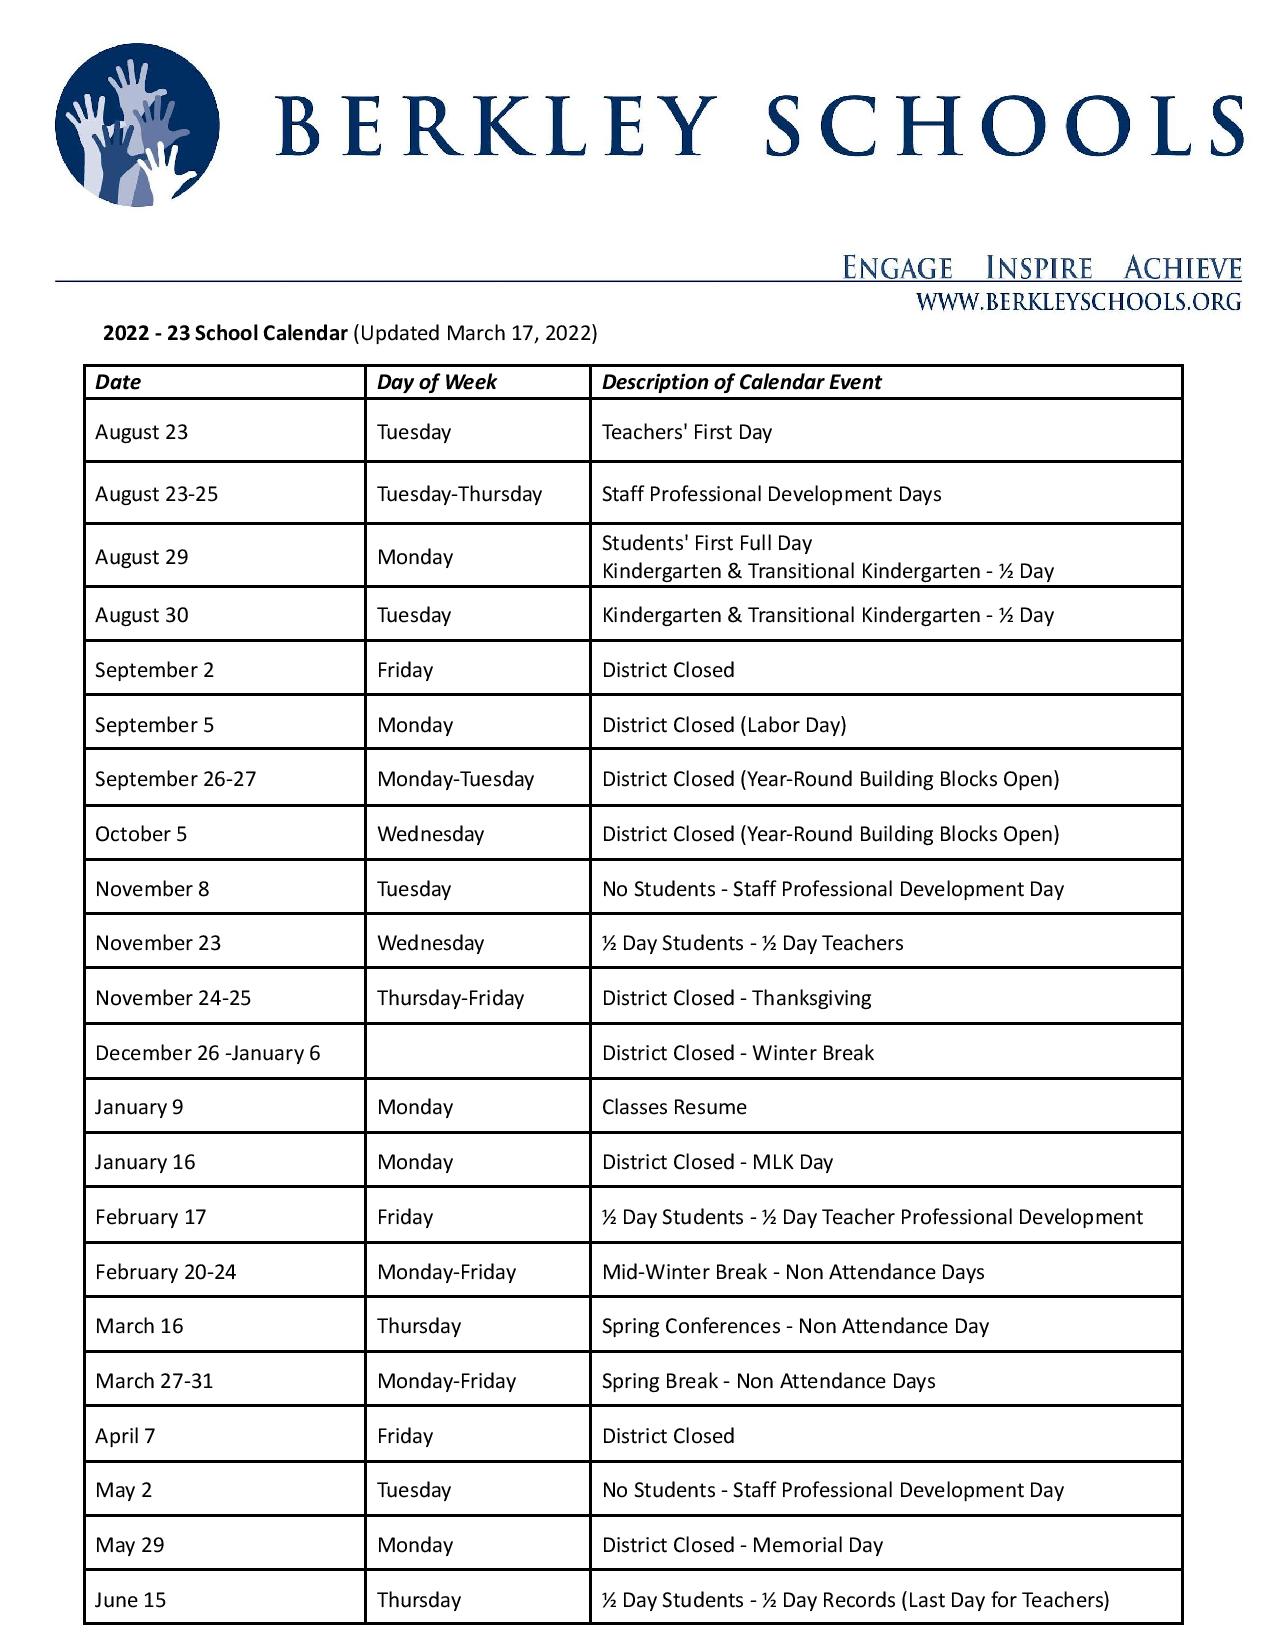 Berkley School District Calendar 20222023 in PDF